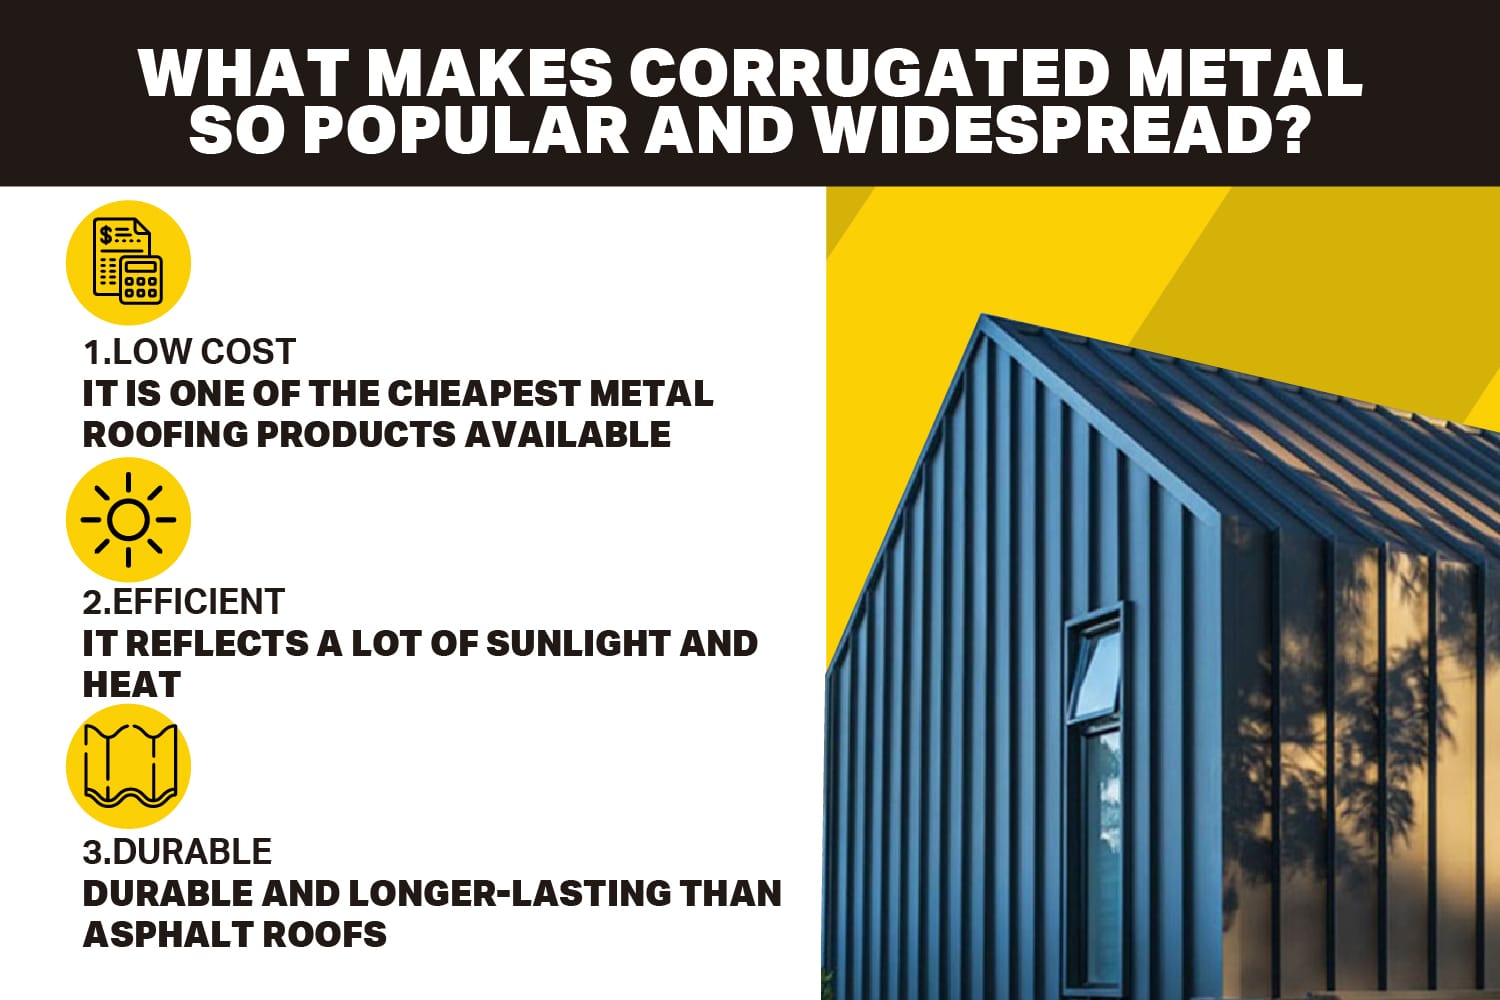 corrugated metal is very popular